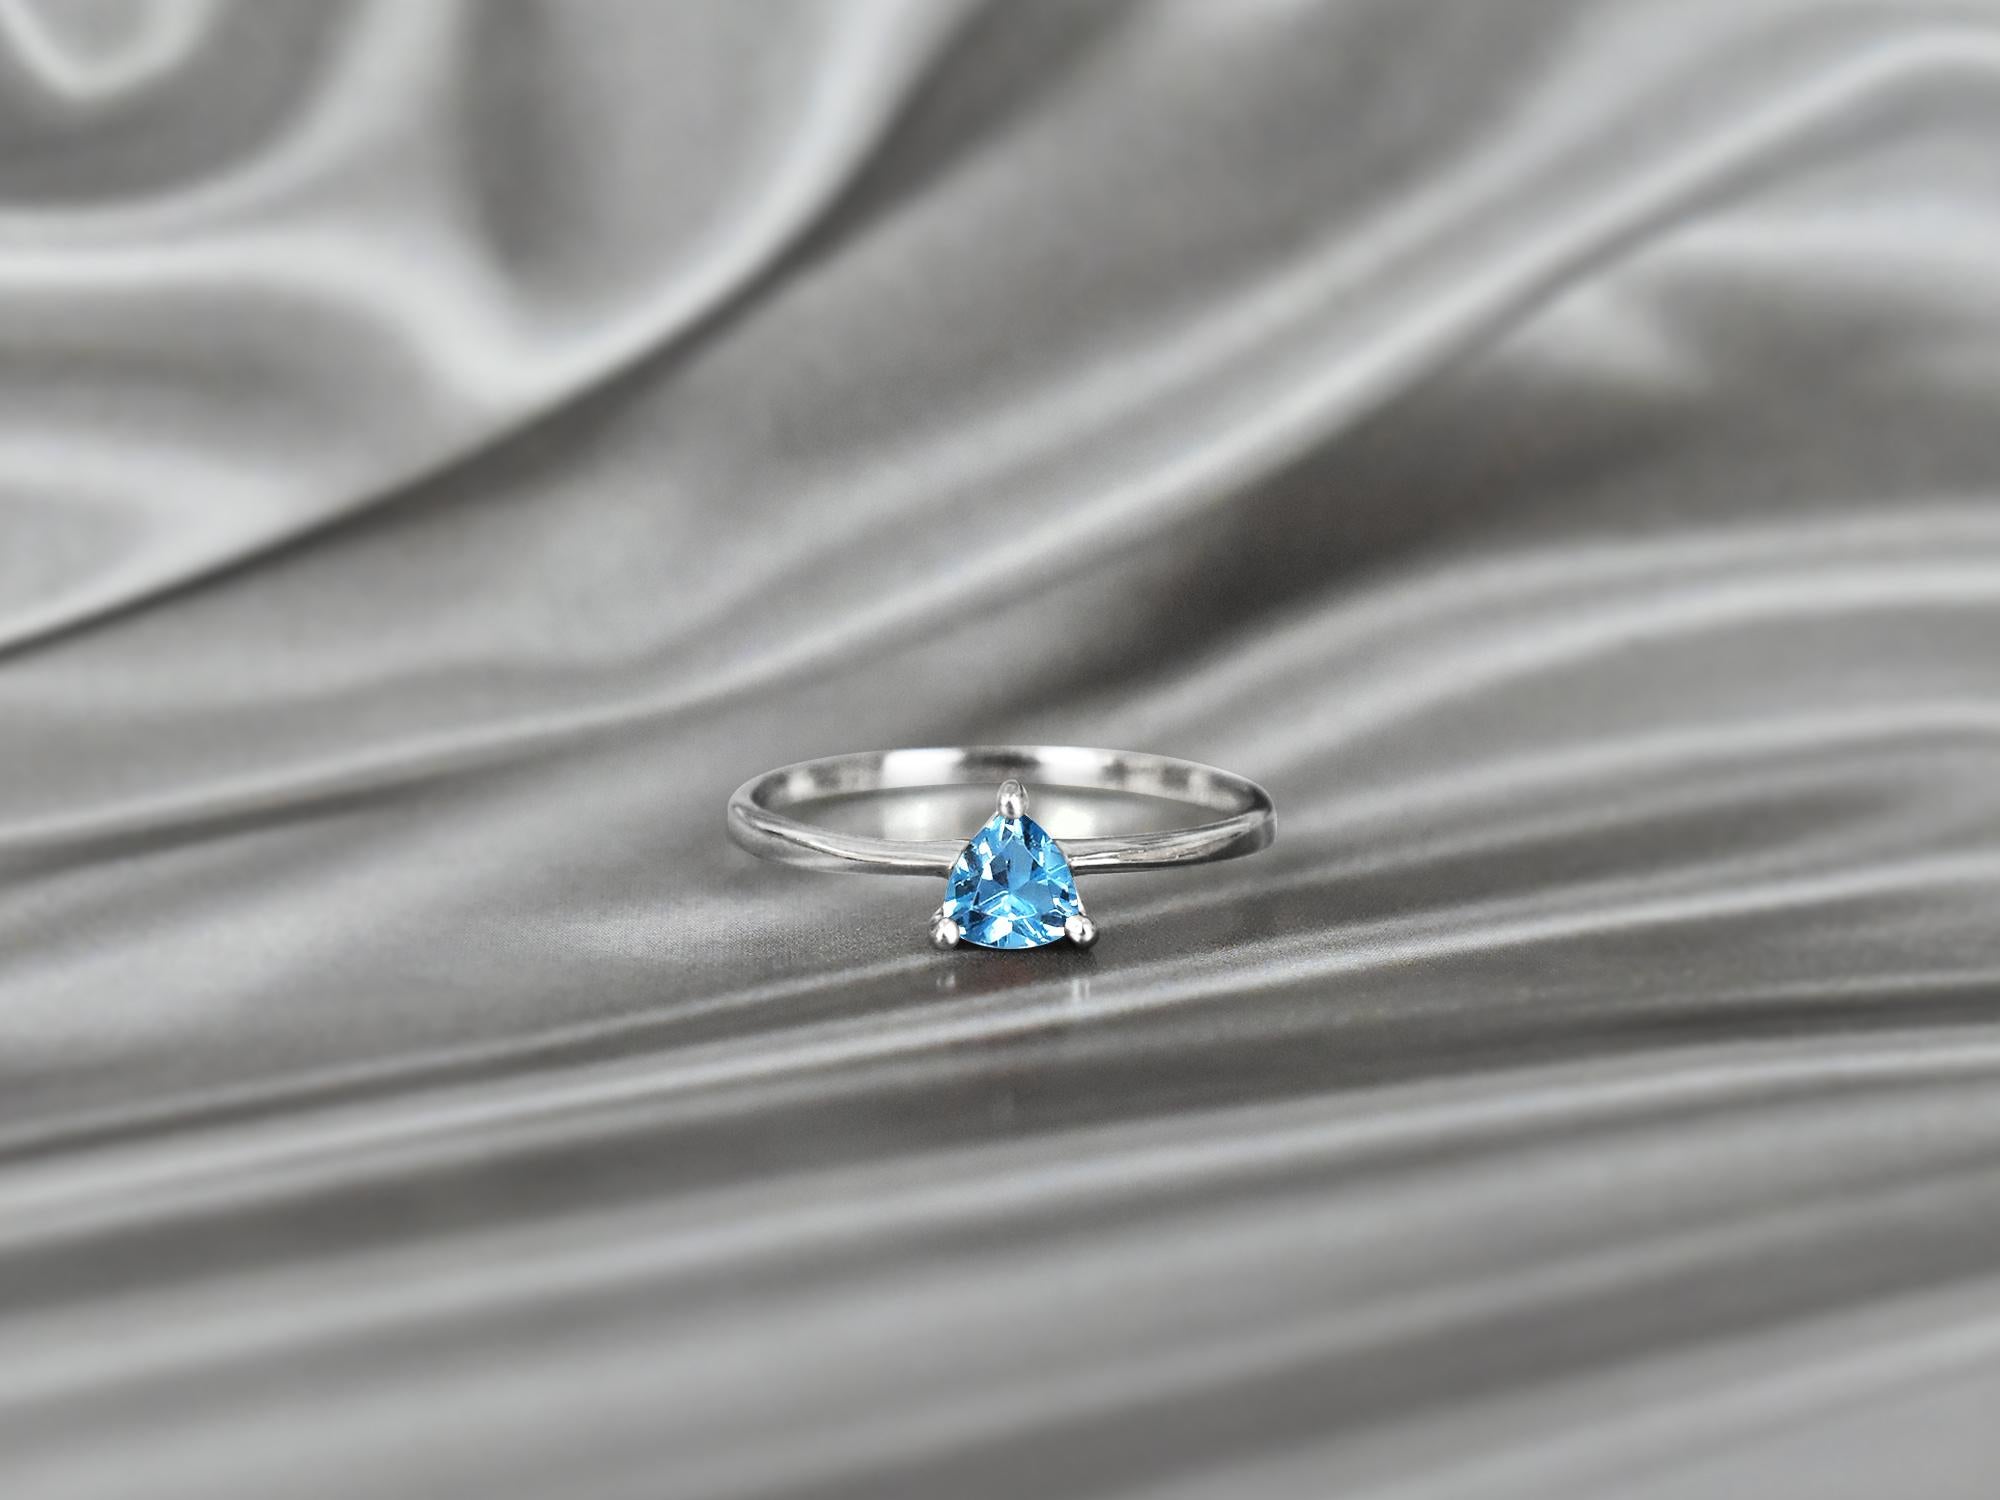 For Sale:  14k Gold Trillion Gemstone 6 mm Trillion Gemstone Engagement Ring Stackable Ring 8